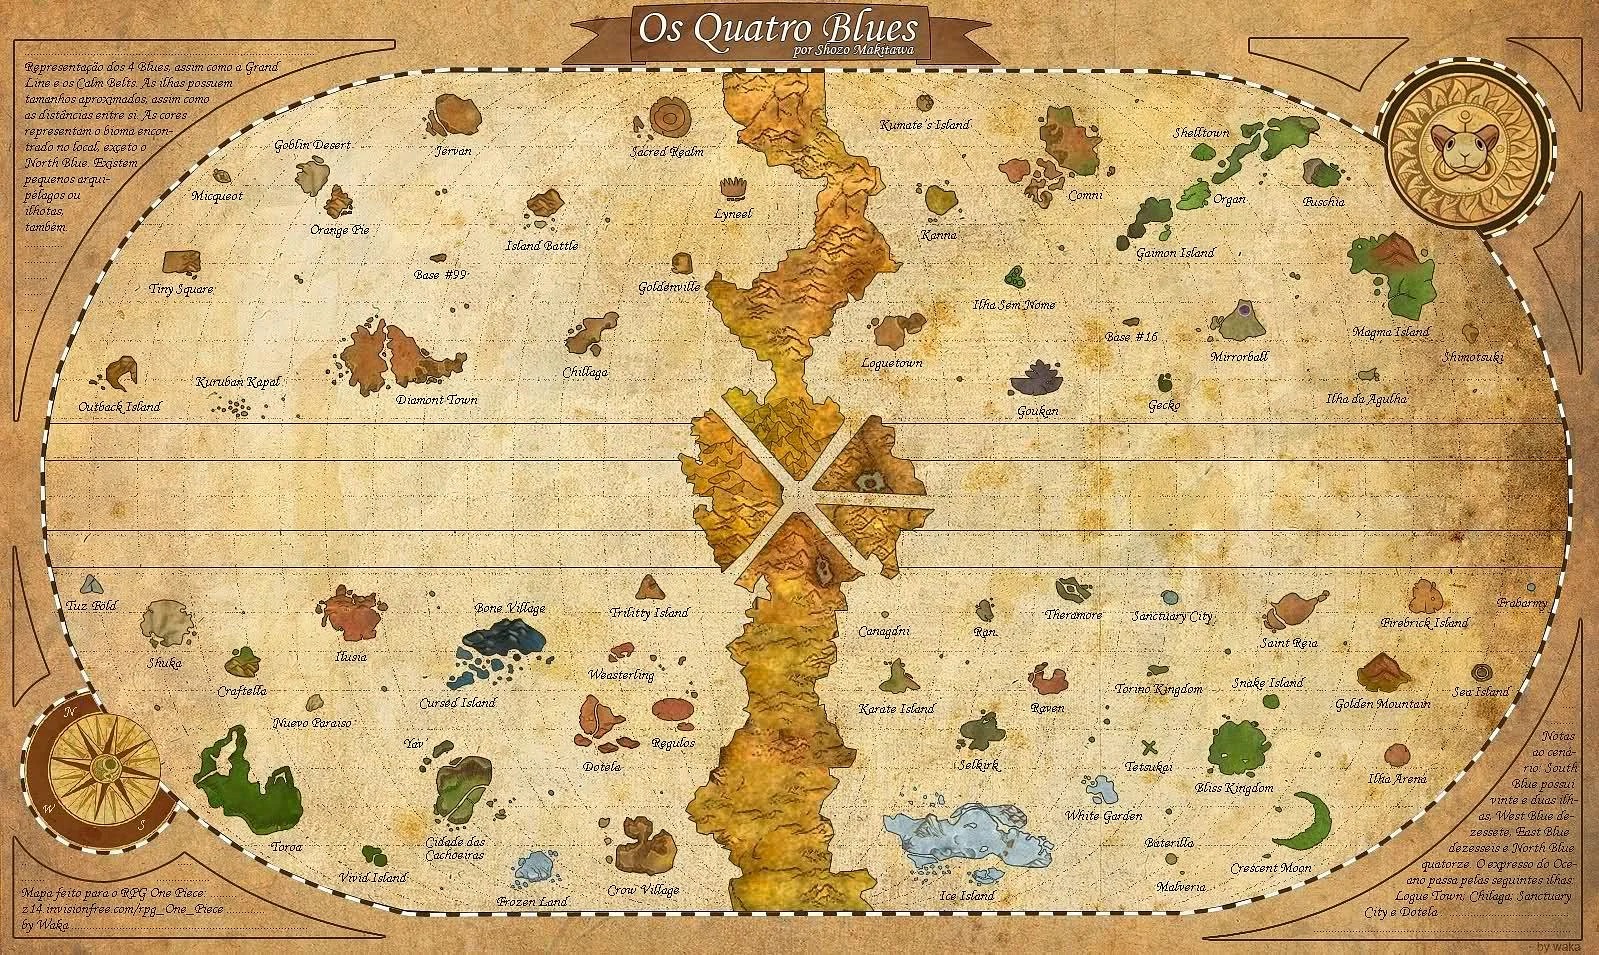 Entenda como funciona o Mapa do mundo de One Piece